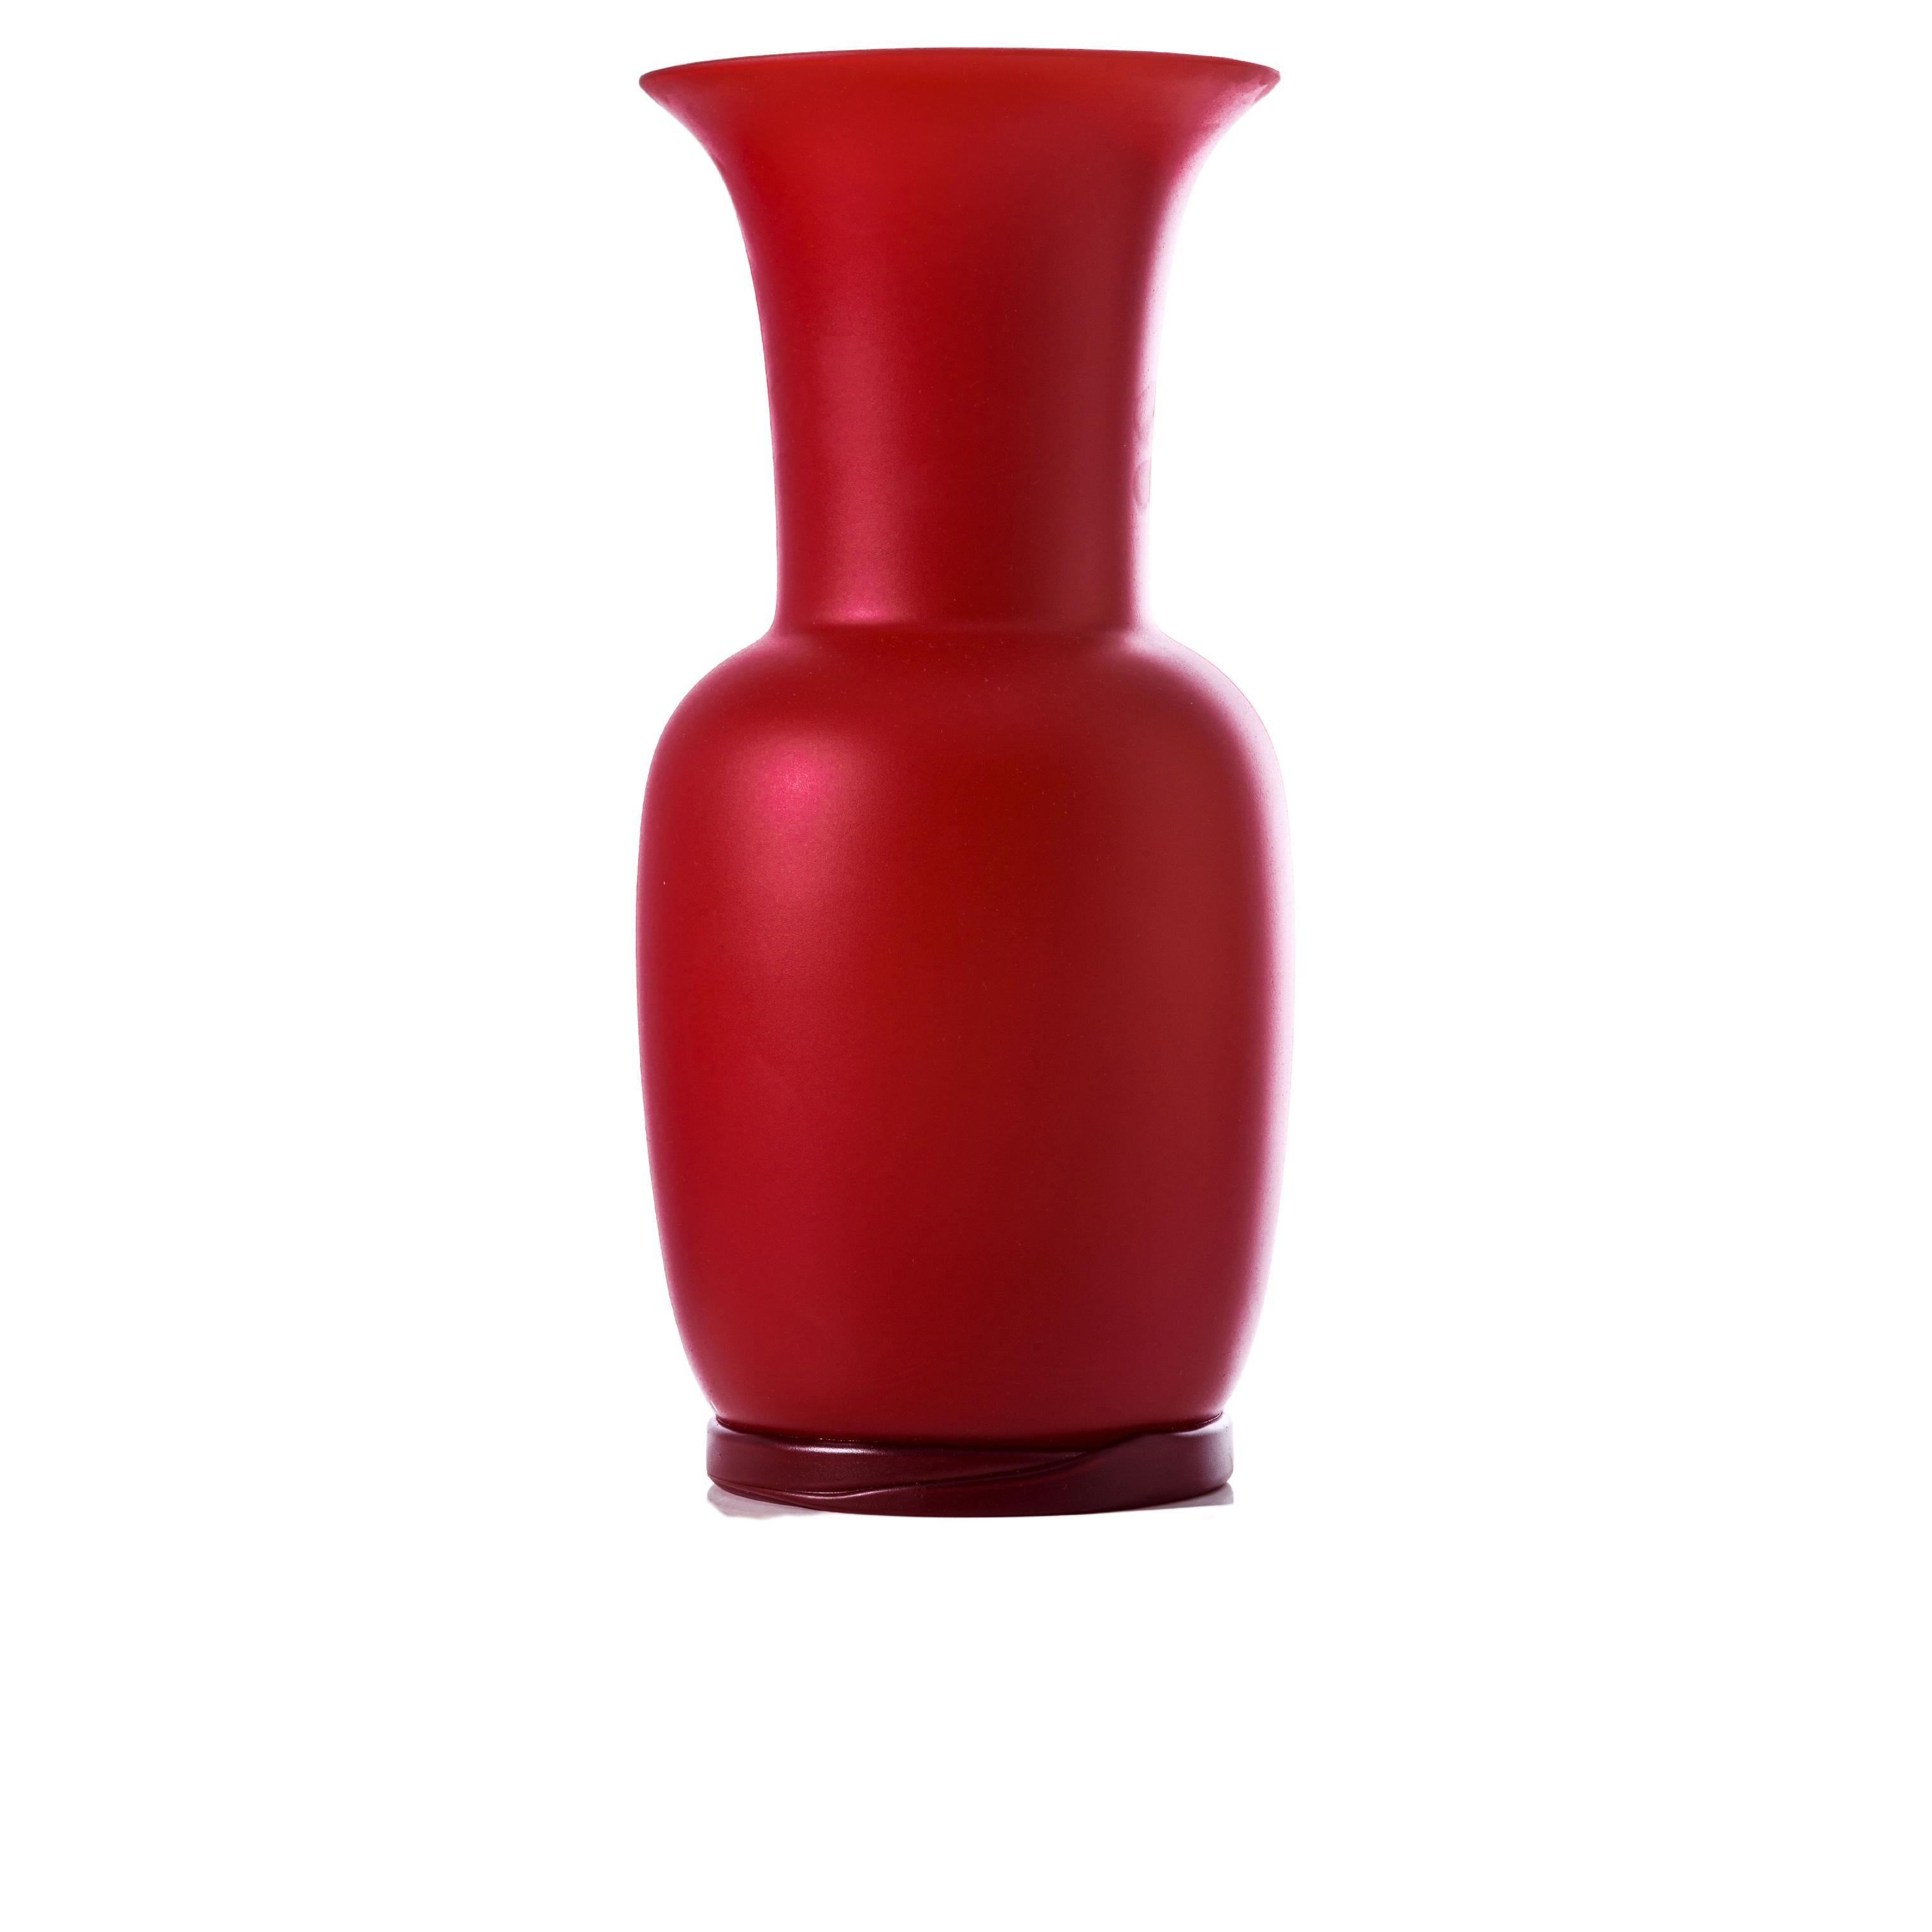 Opalino Sabbiato Glass Vase in Red by Venini